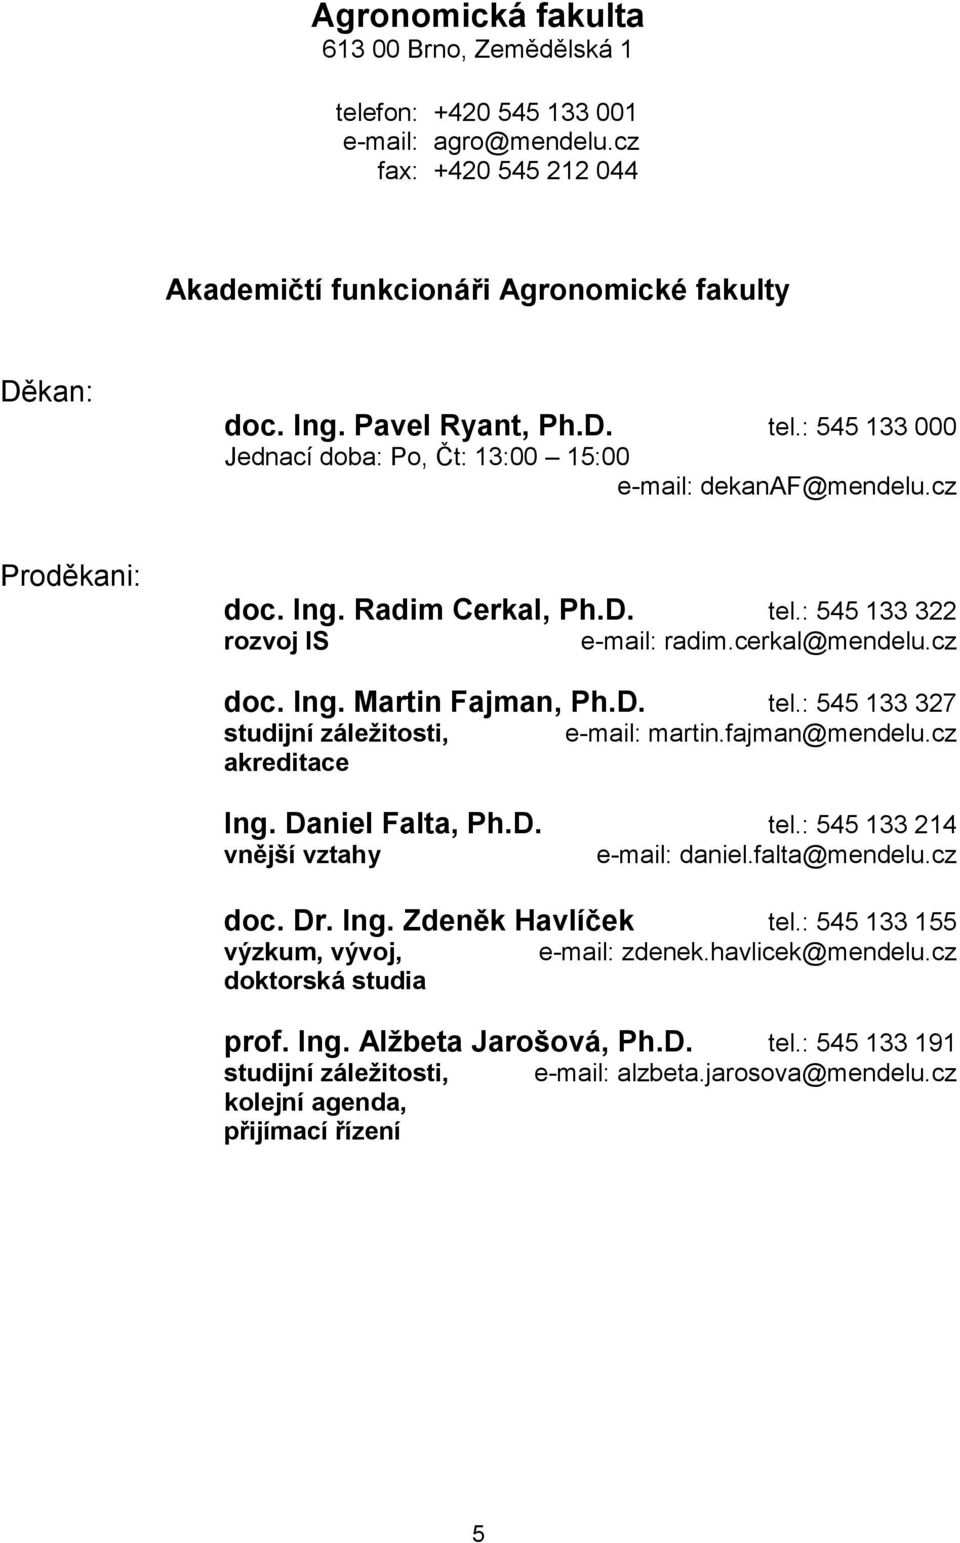 fajman@mendelu.cz Ing. Daniel Falta, Ph.D. tel.: 545 133 214 vnější vztahy e-mail: daniel.falta@mendelu.cz doc. Dr. Ing. Zdeněk Havlíček tel.